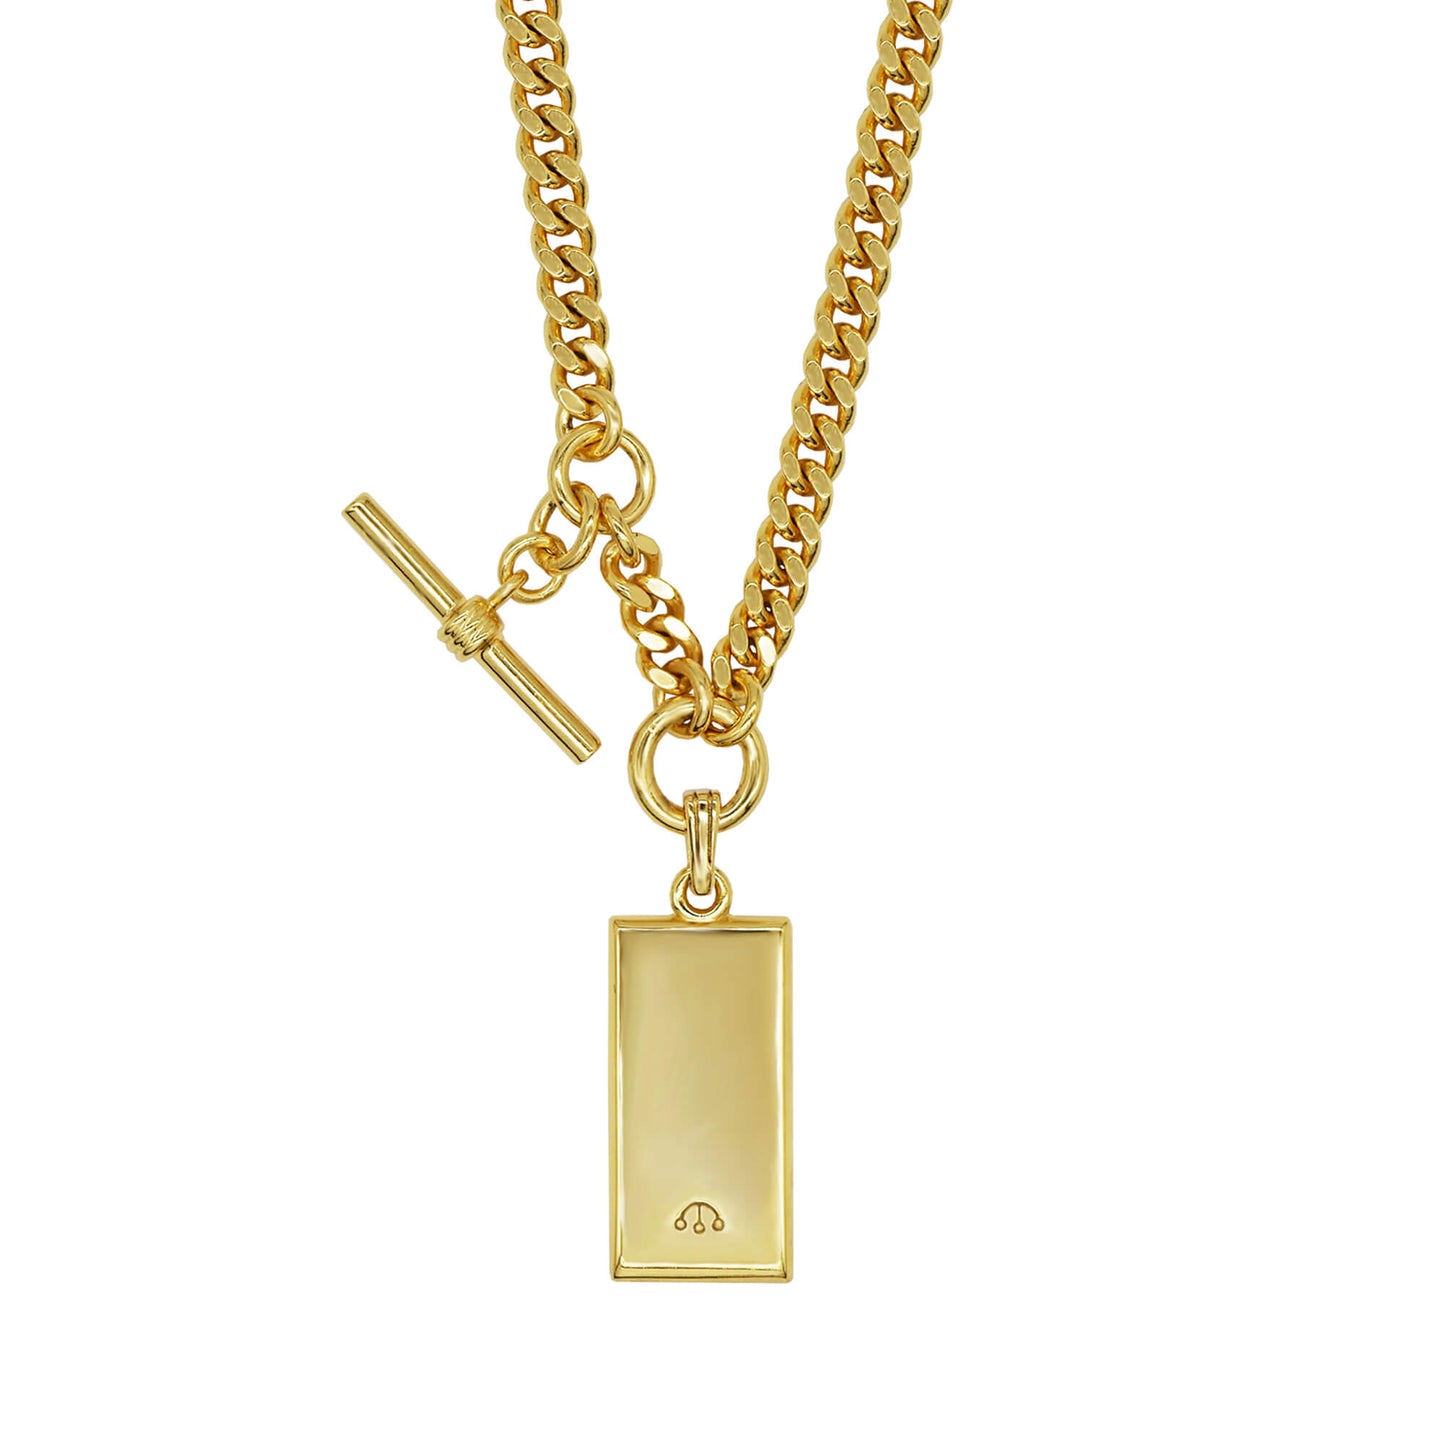 Gold curb chain with ingot & t bar charm- ball logo on ingot.